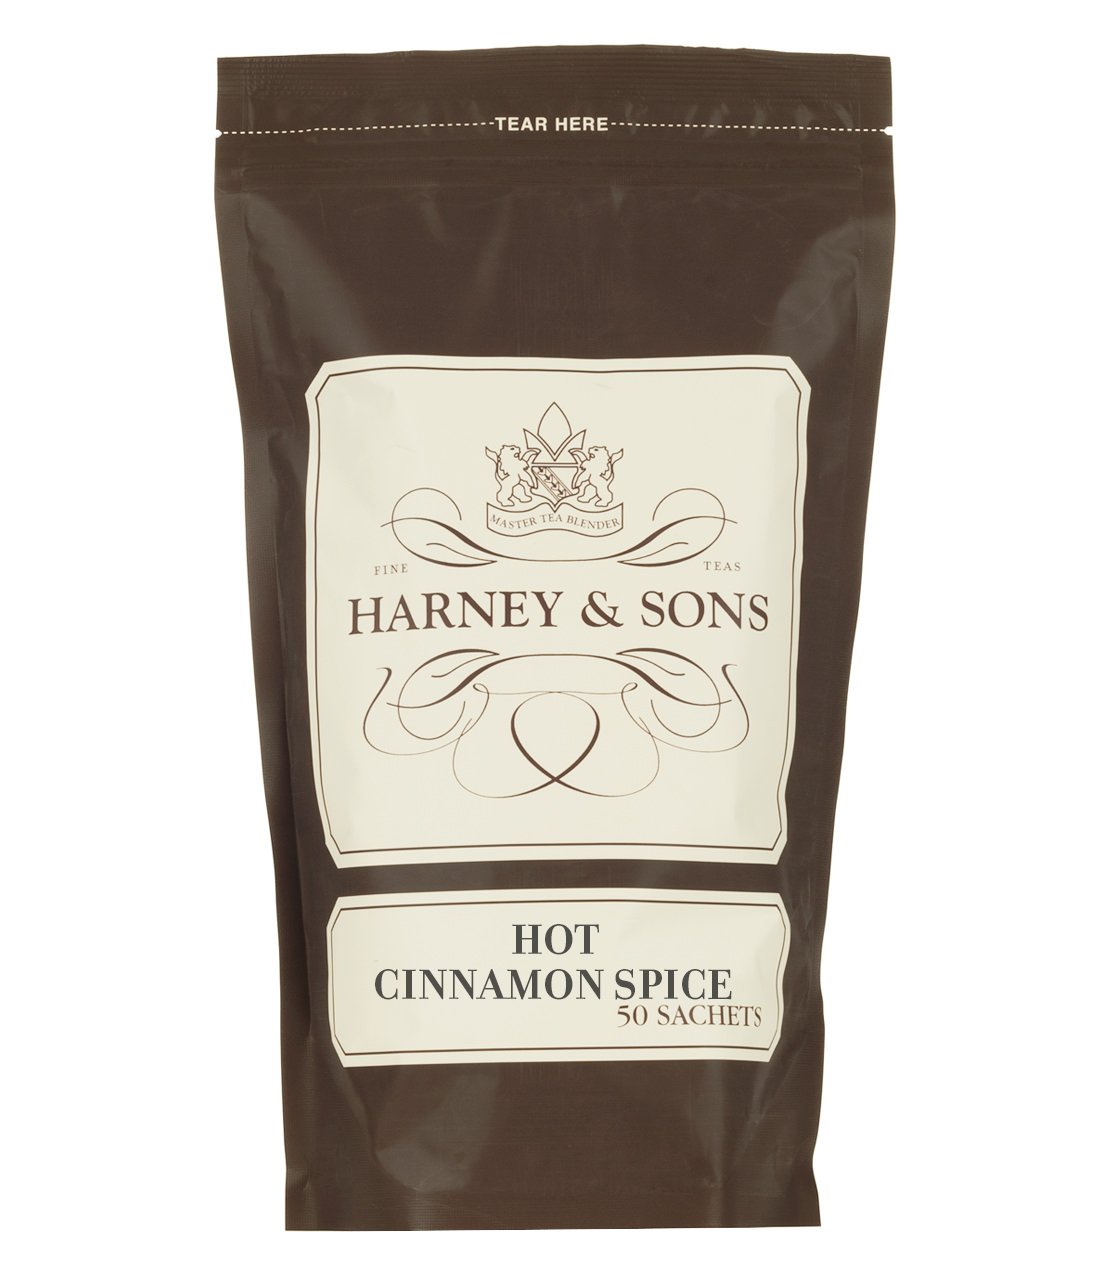 Hot Cinnamon Spice - Harney & Sons Teas, European Distribution Center